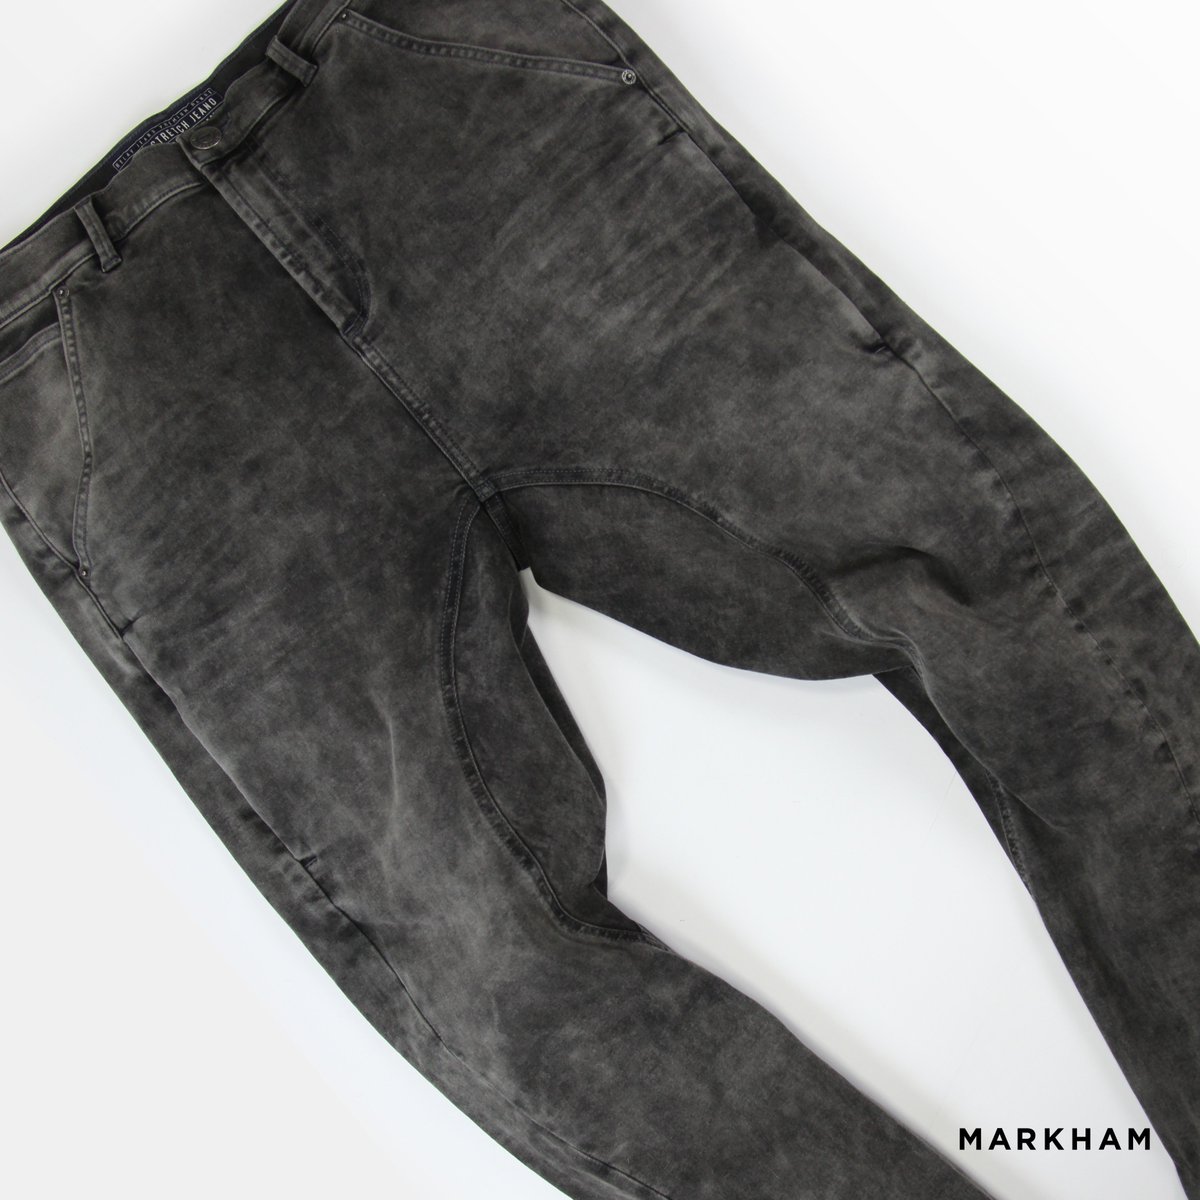 markhams jeans